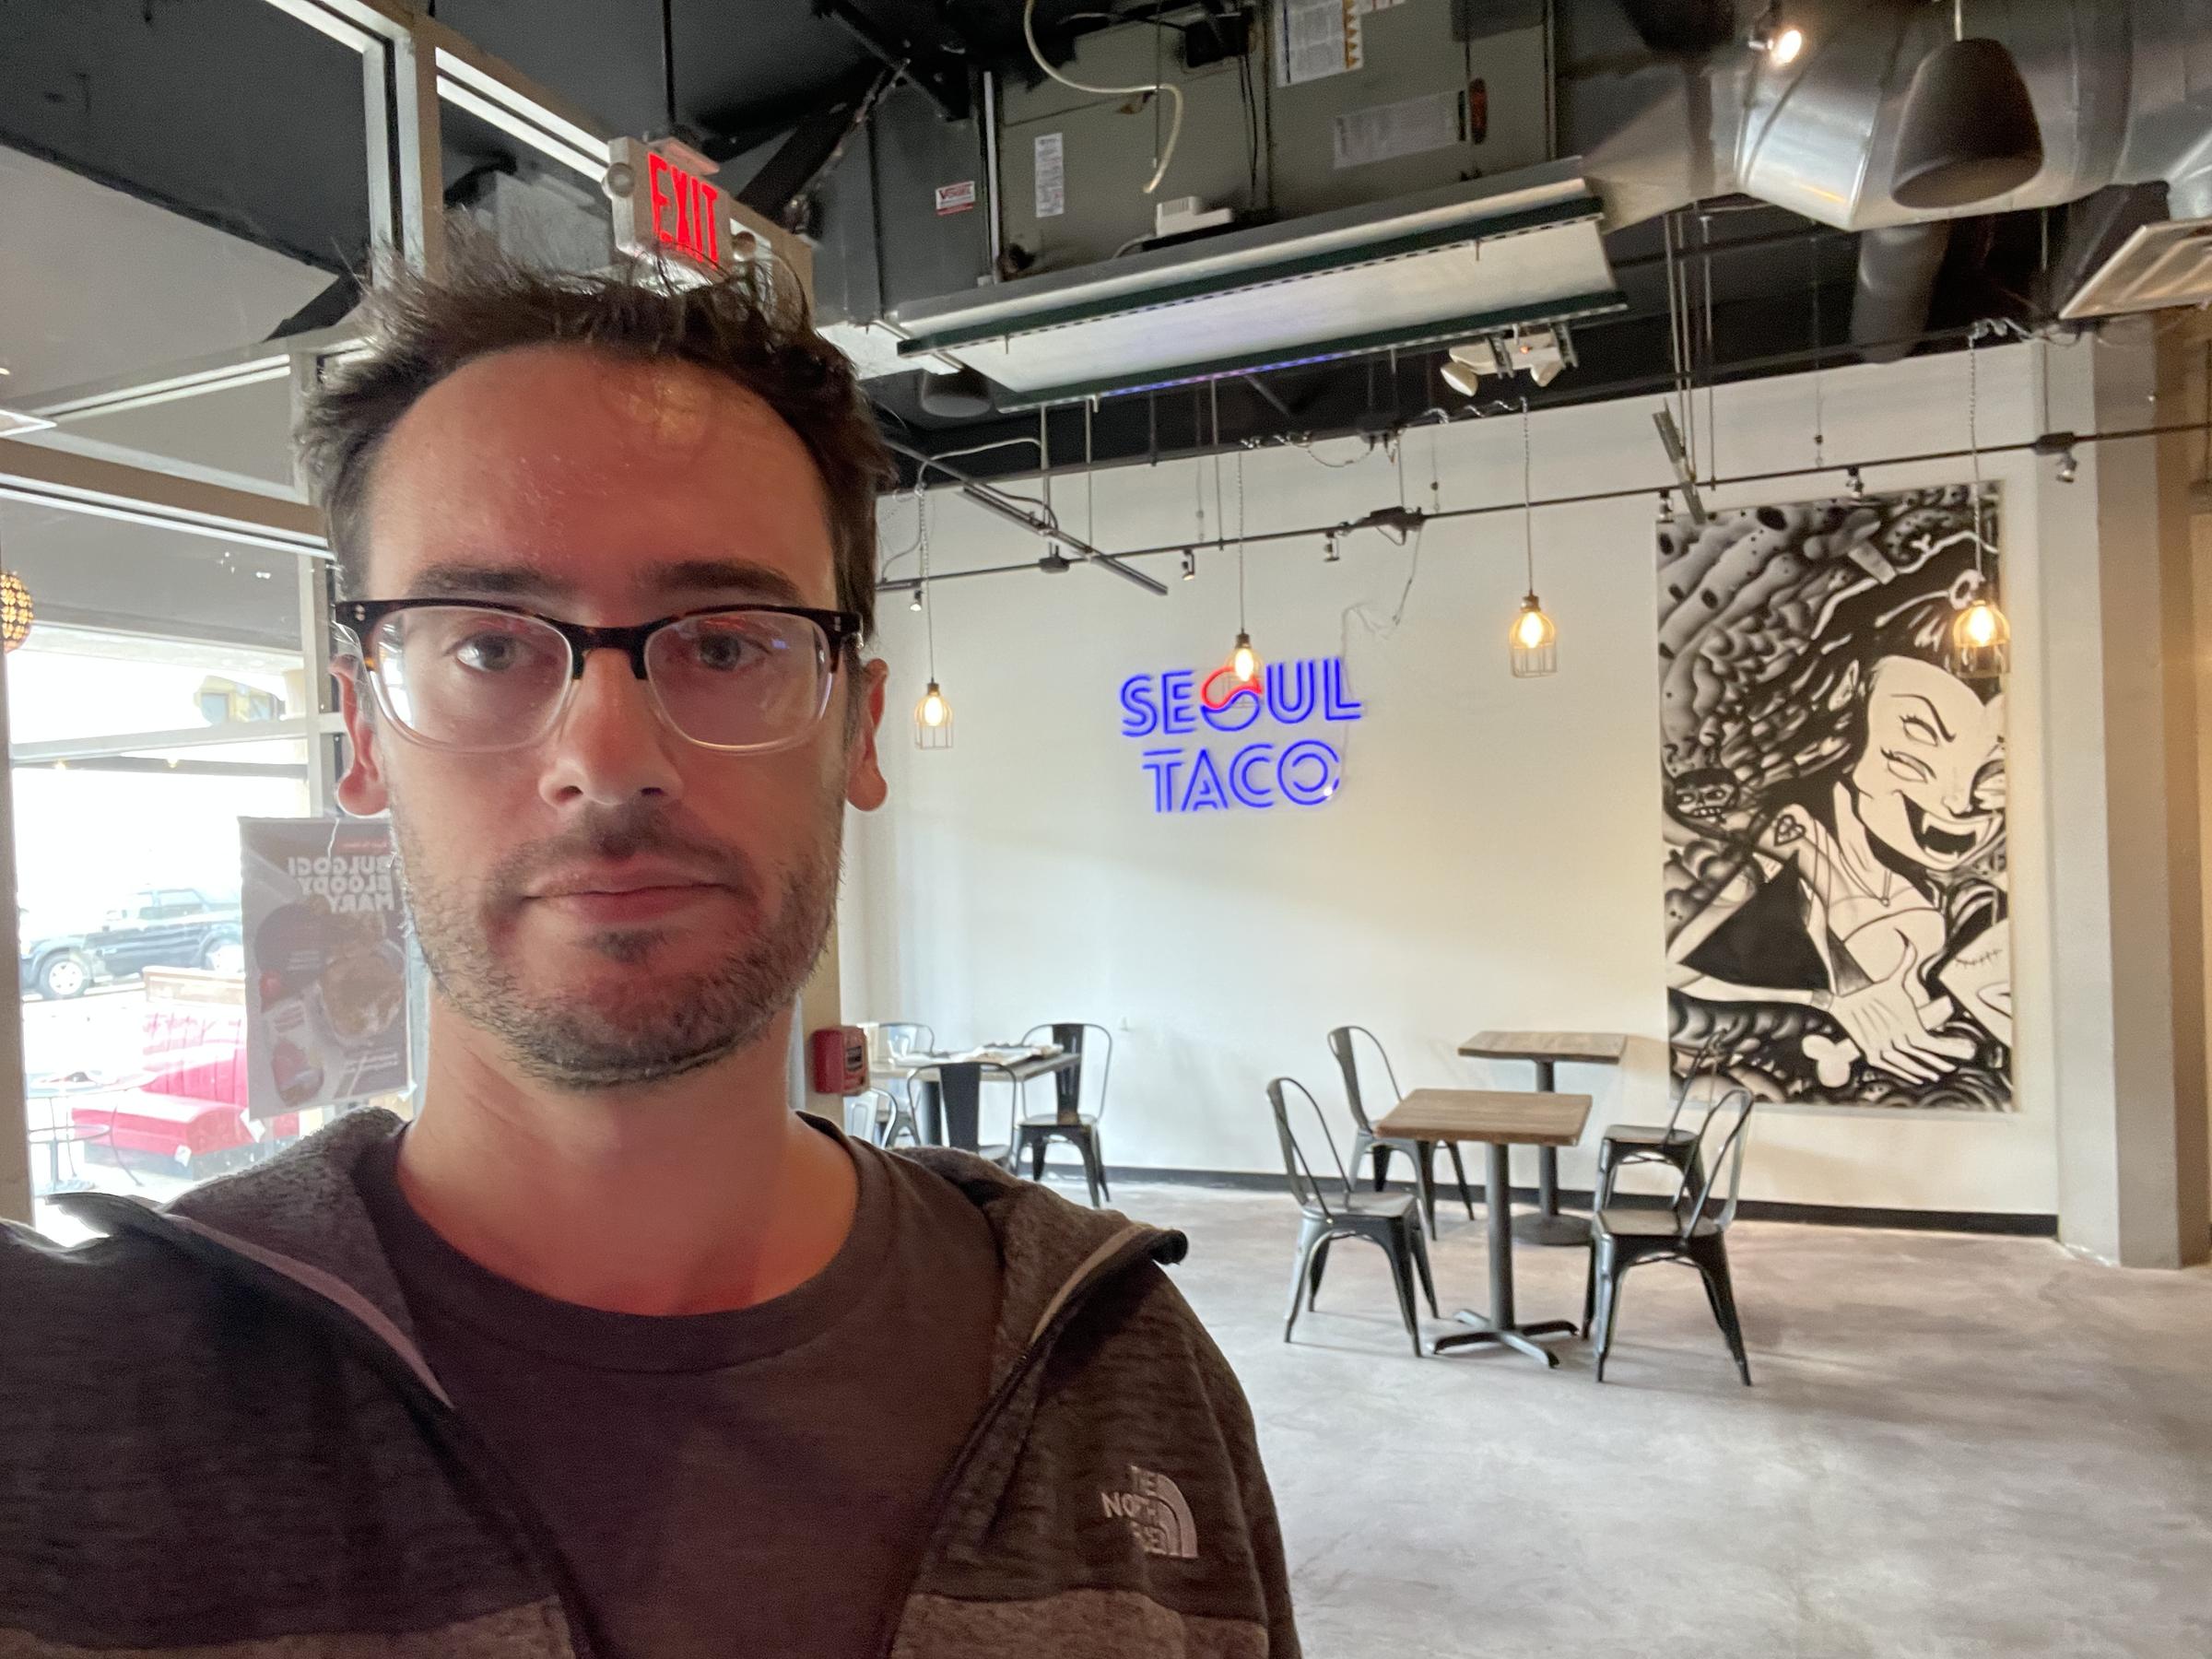 Seoul Taco selfie